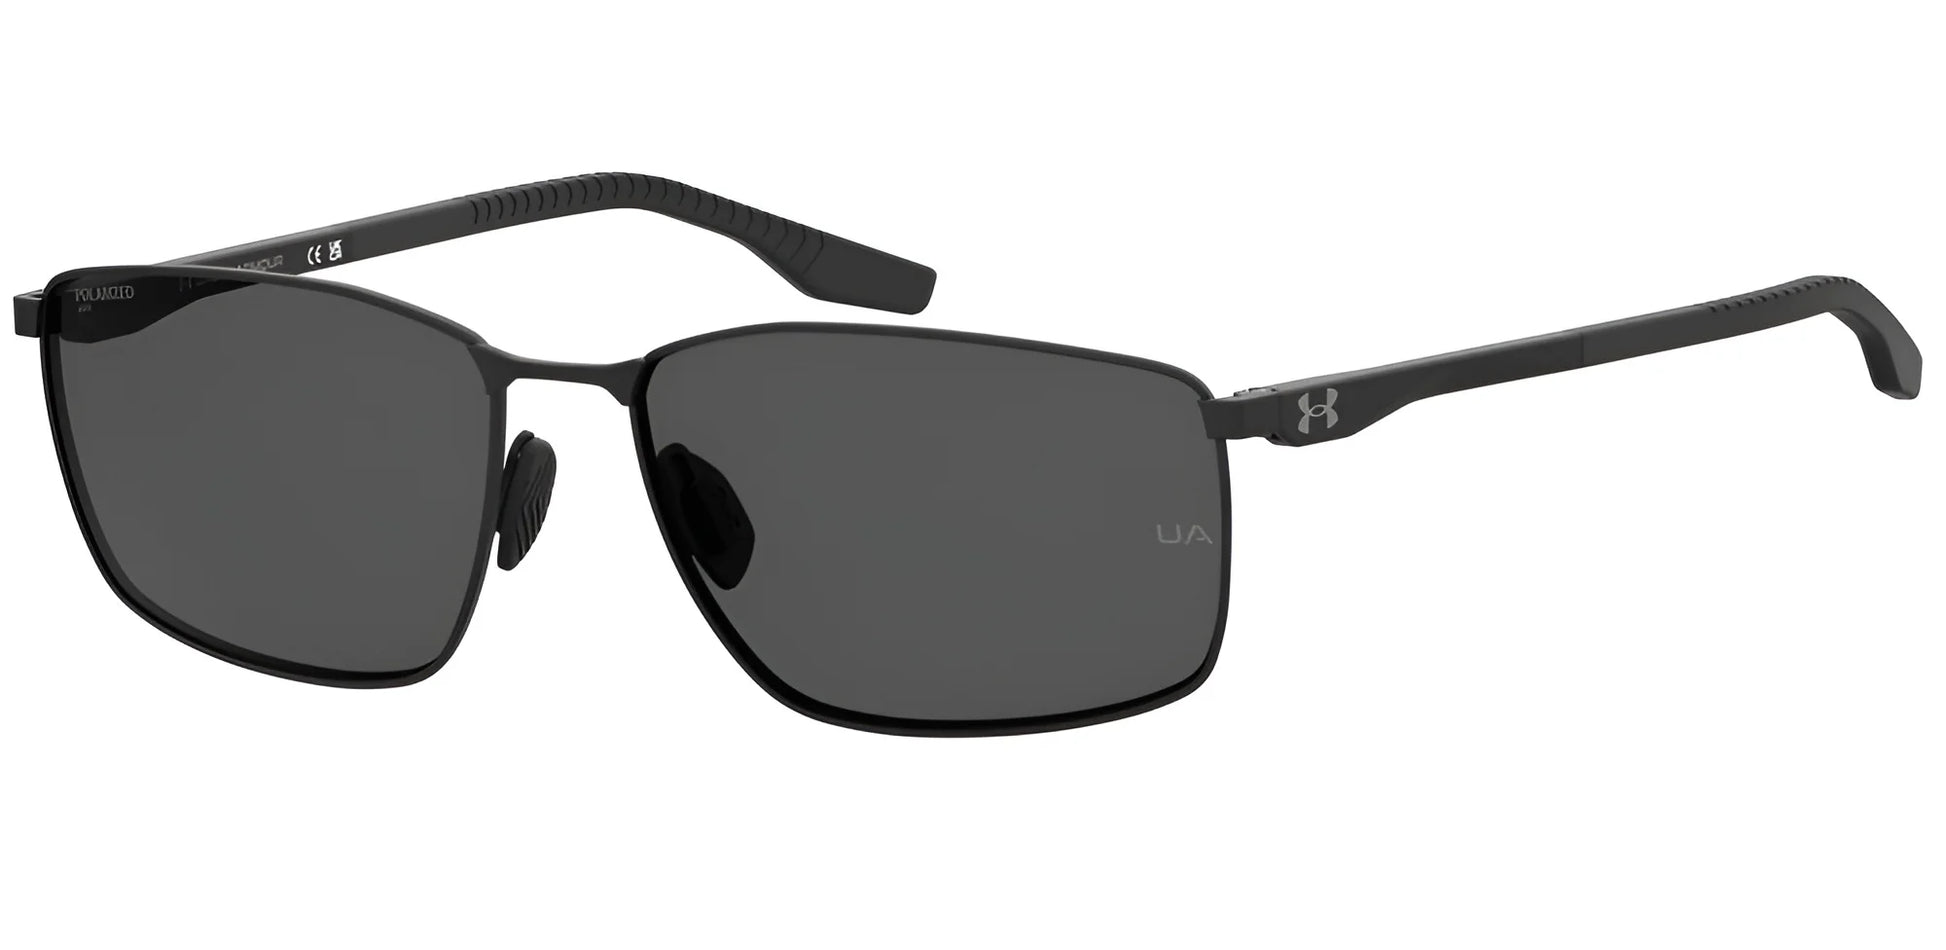 Under Armour FOCUSED Sunglasses Mttblack / Grey Polarized